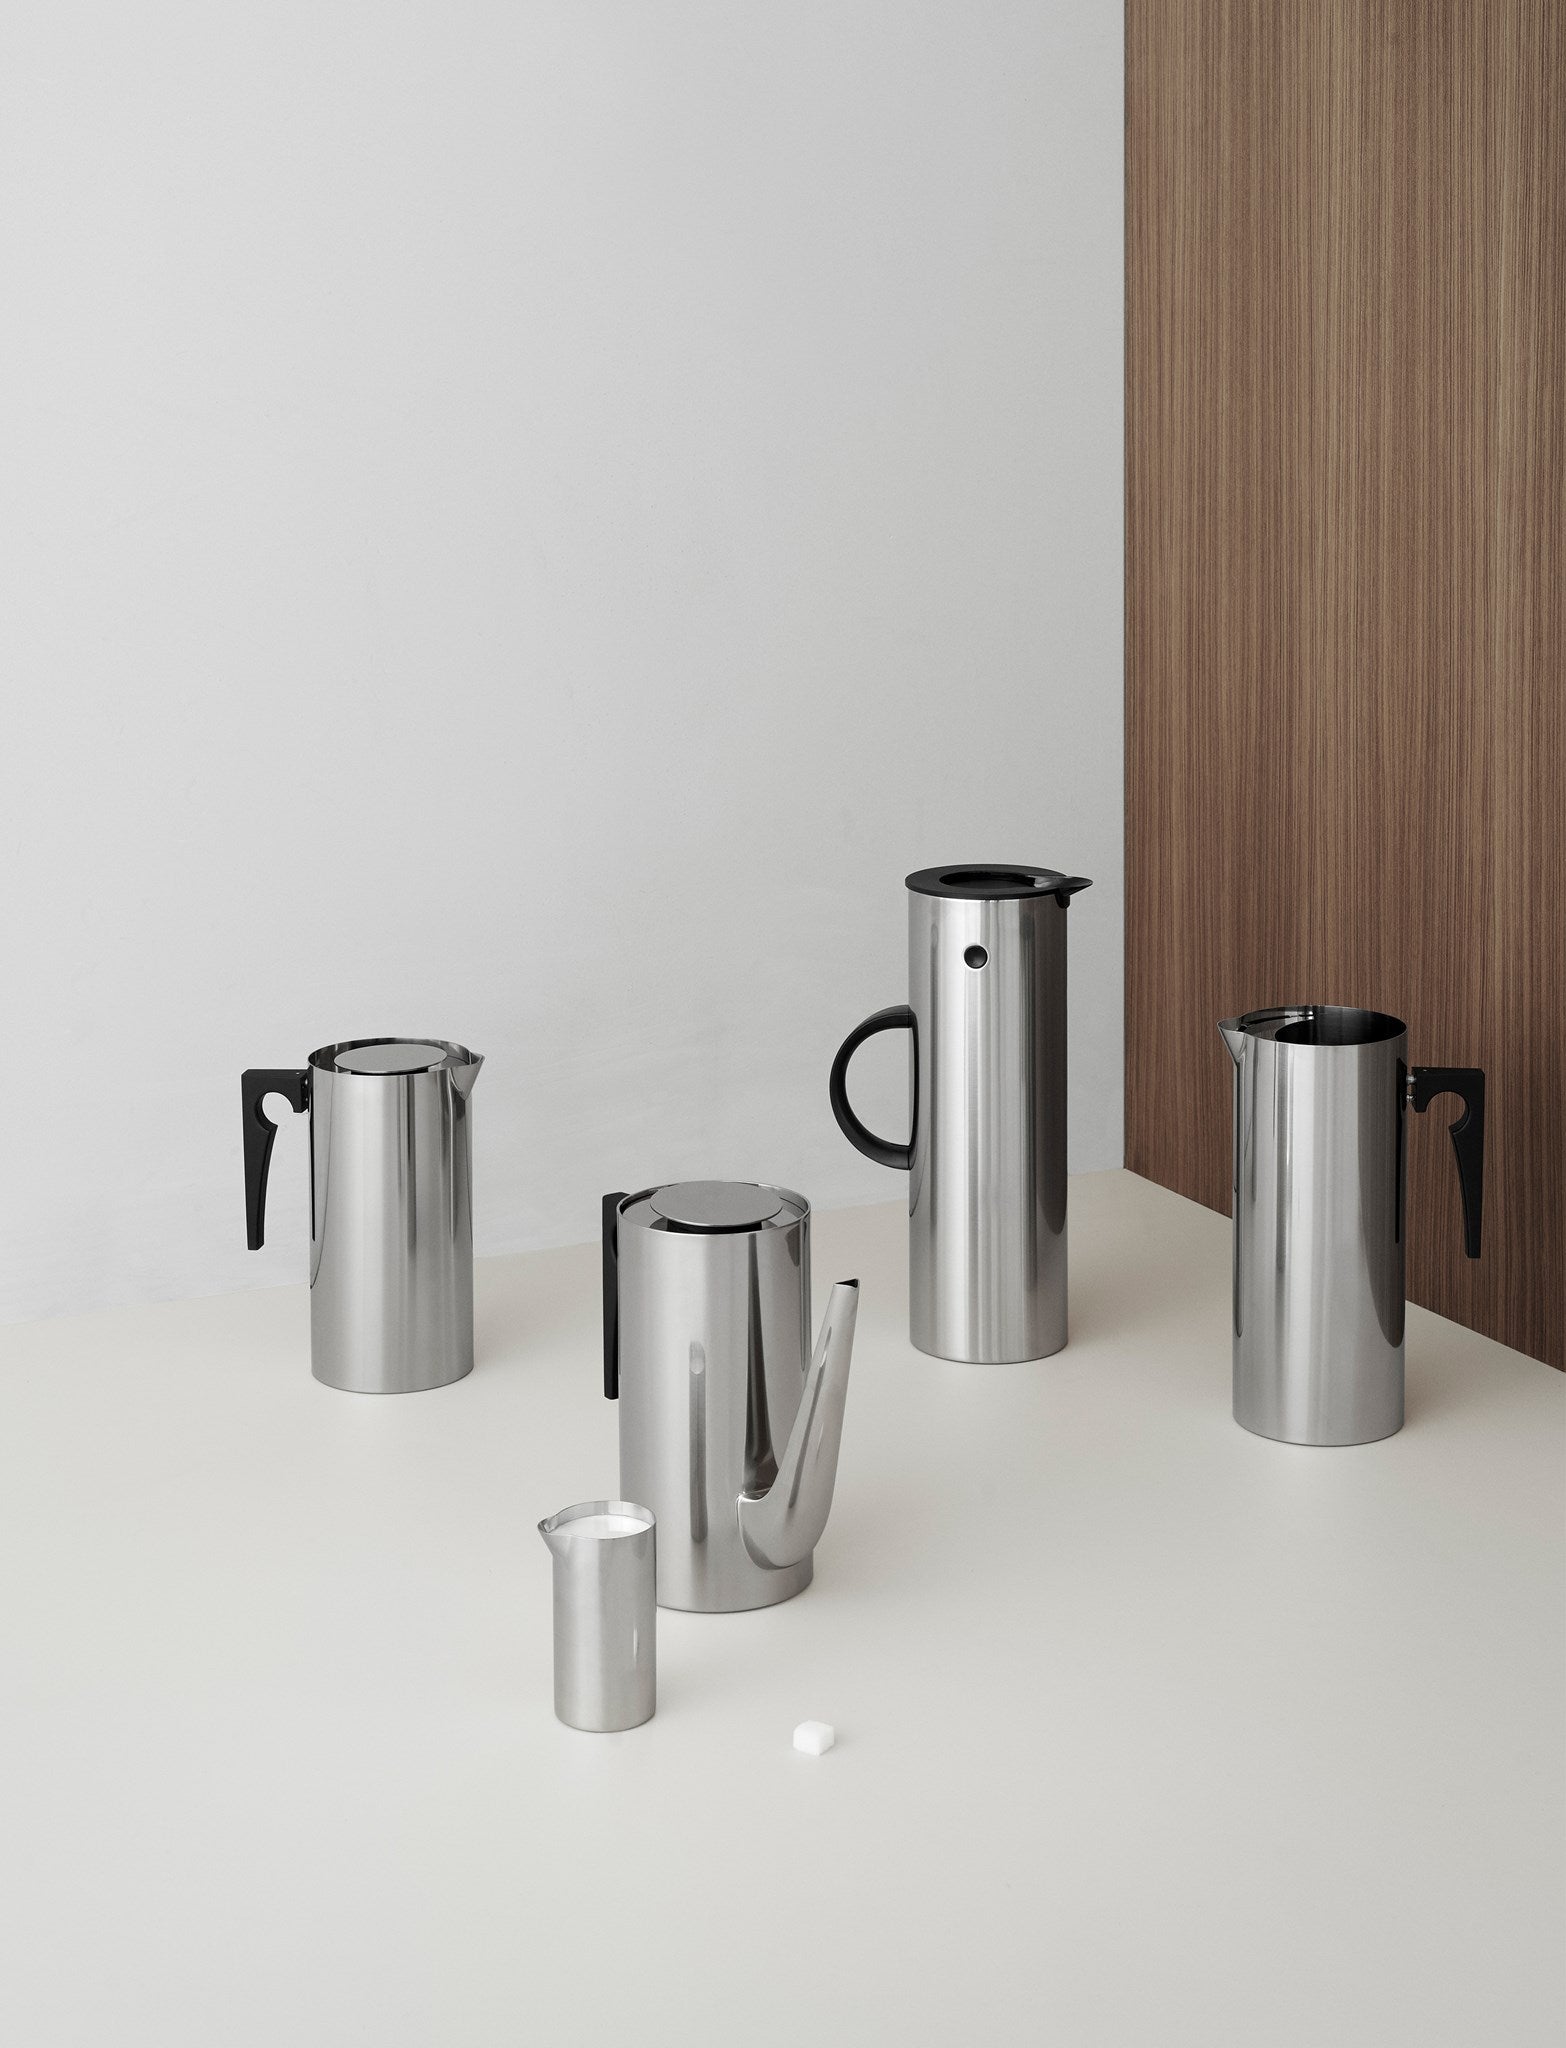 Stelton Arne Jacobsen Koffiepot 1,5 l